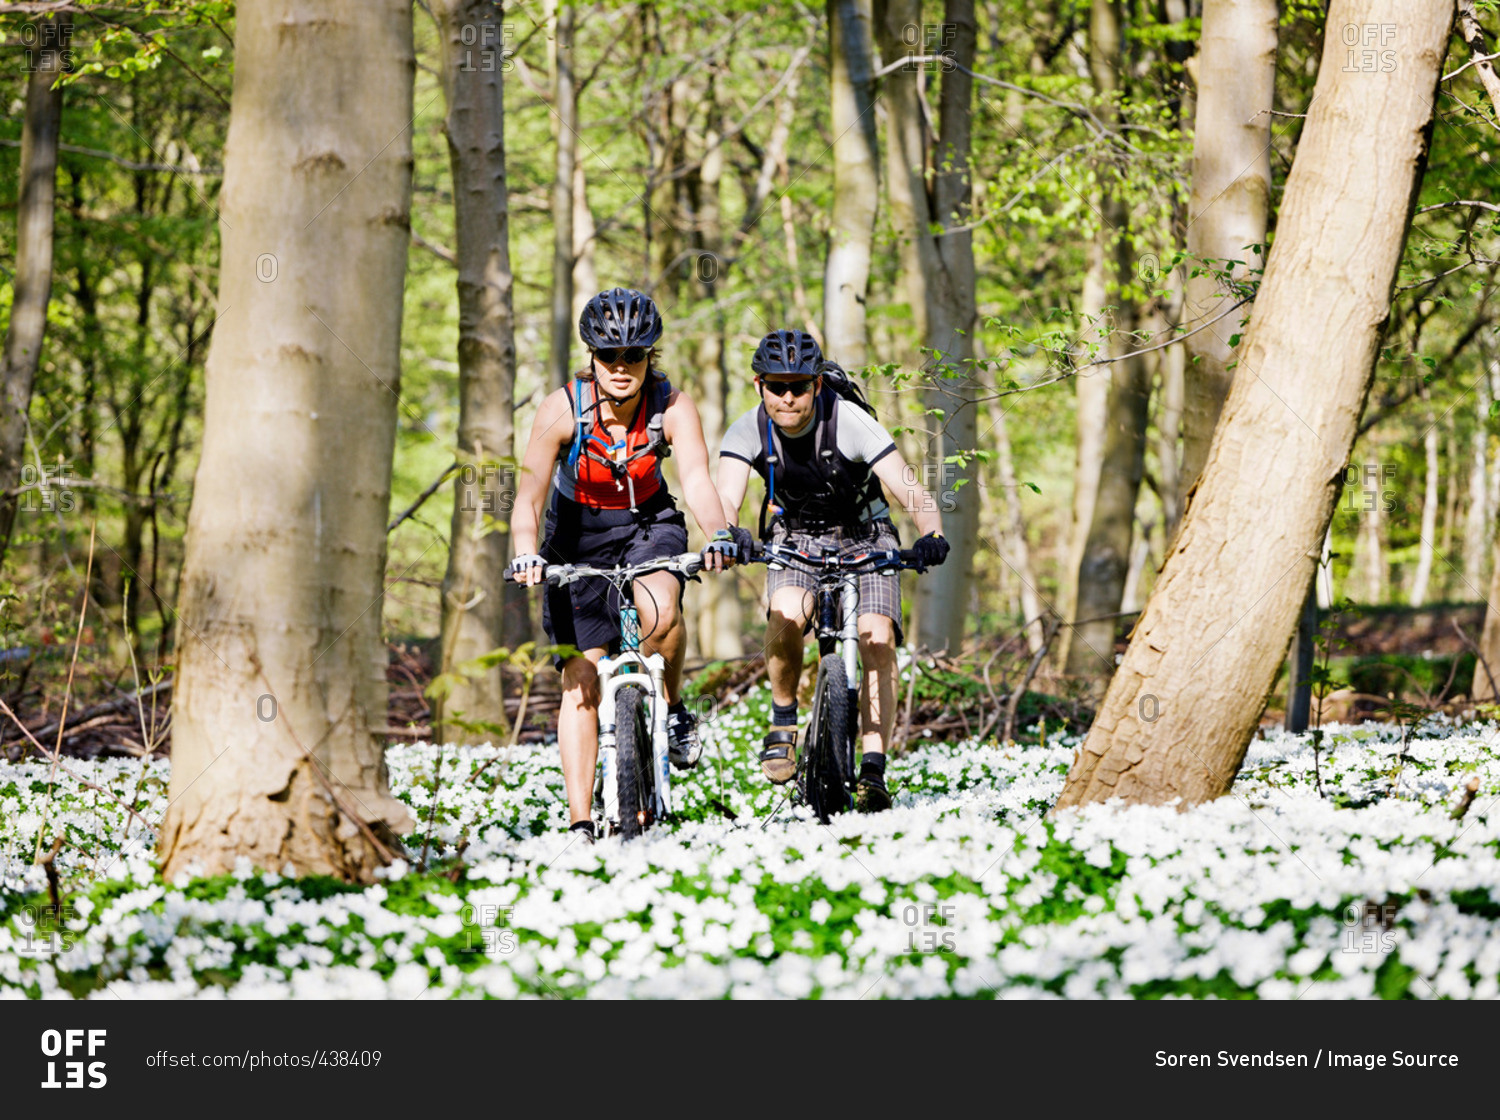 Couple mountain biking together